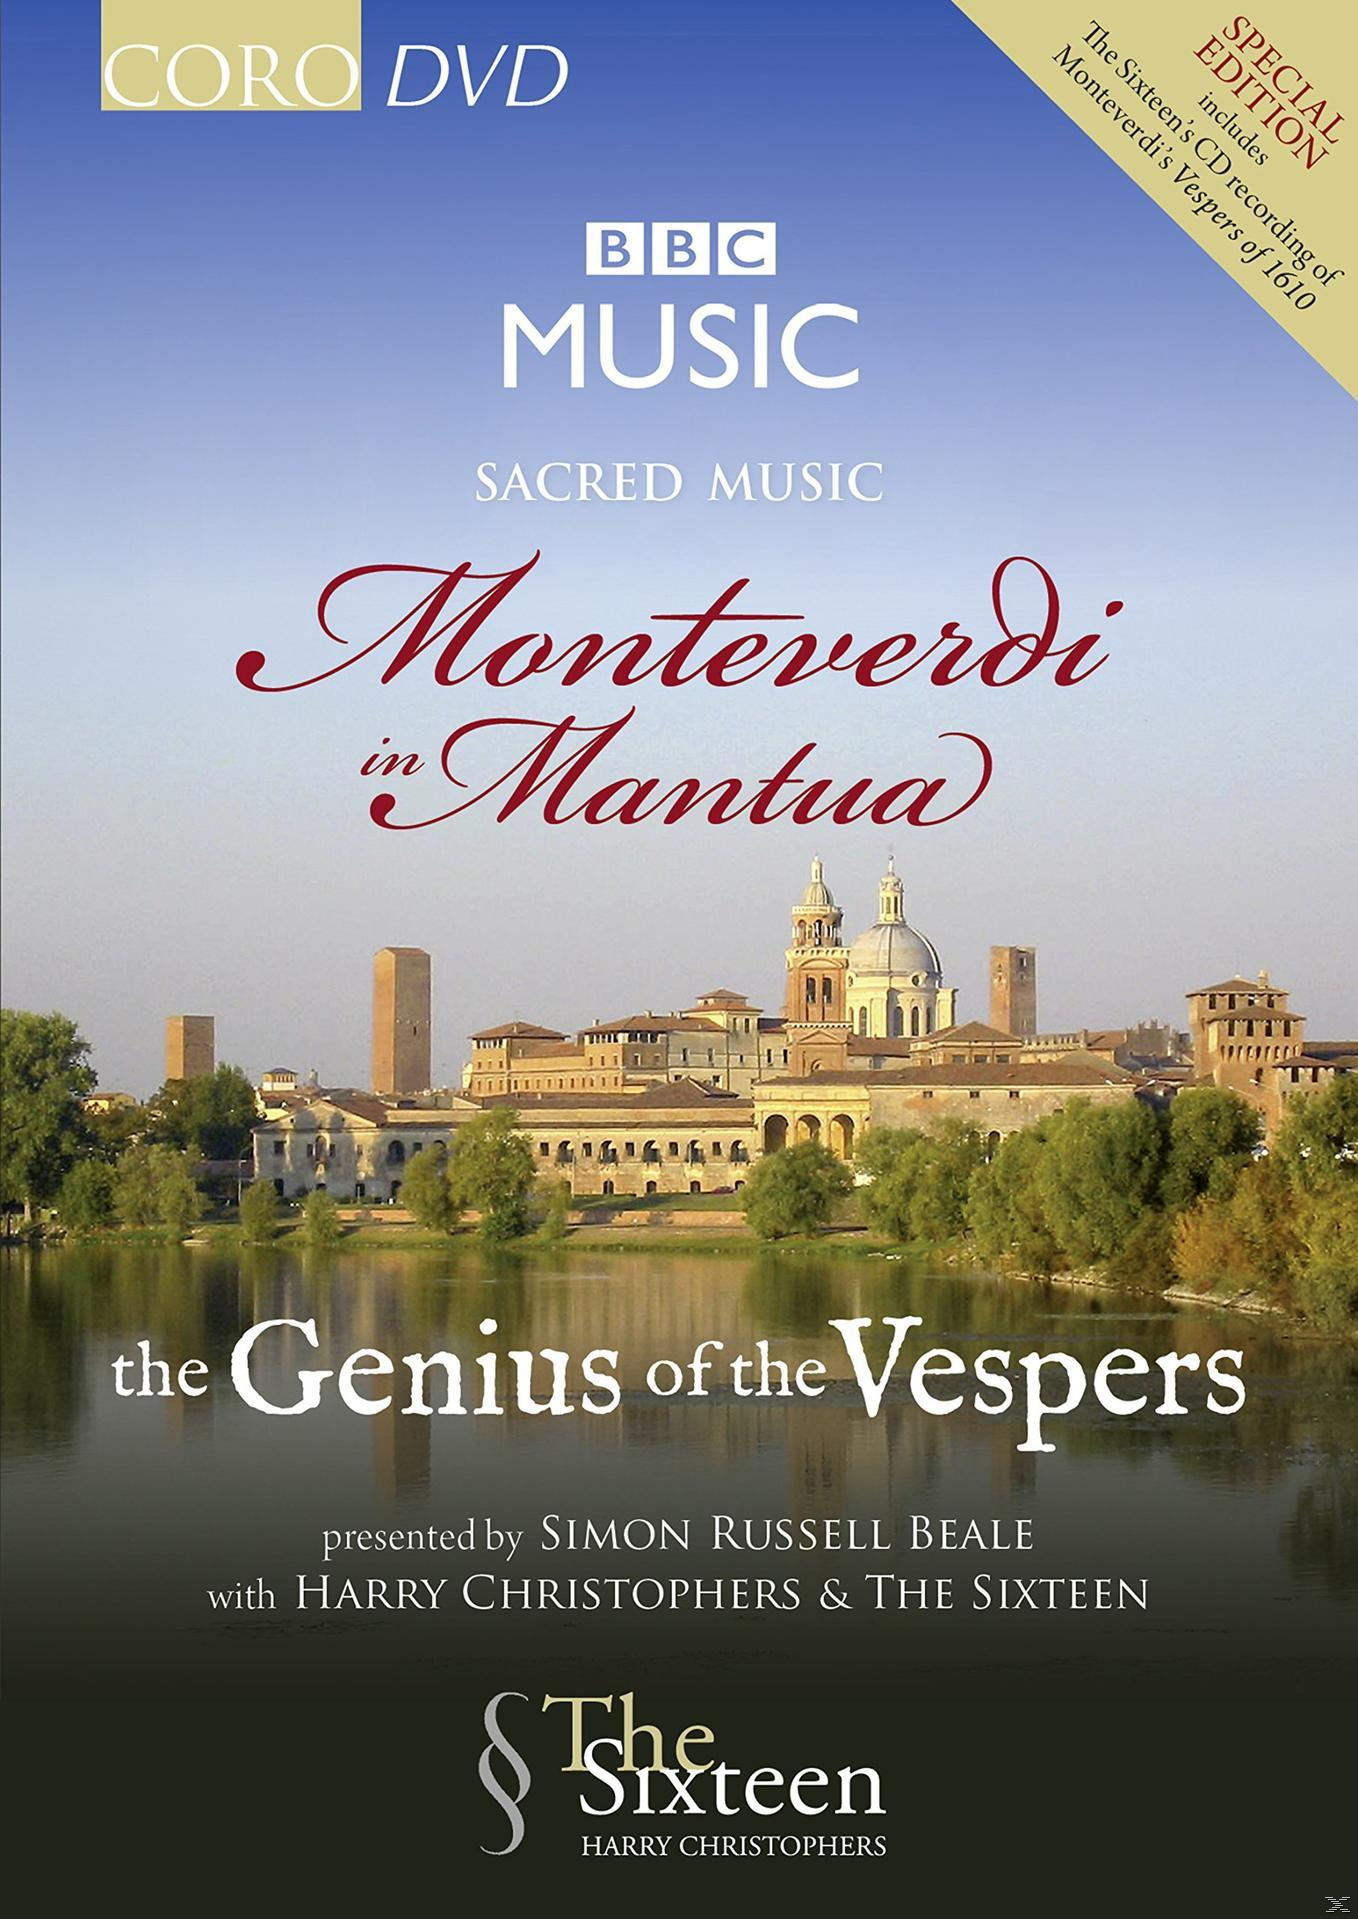 - The Monteverdi + (Dvd+2 - (DVD Cd-Version) Mantua CD) Sixteen In